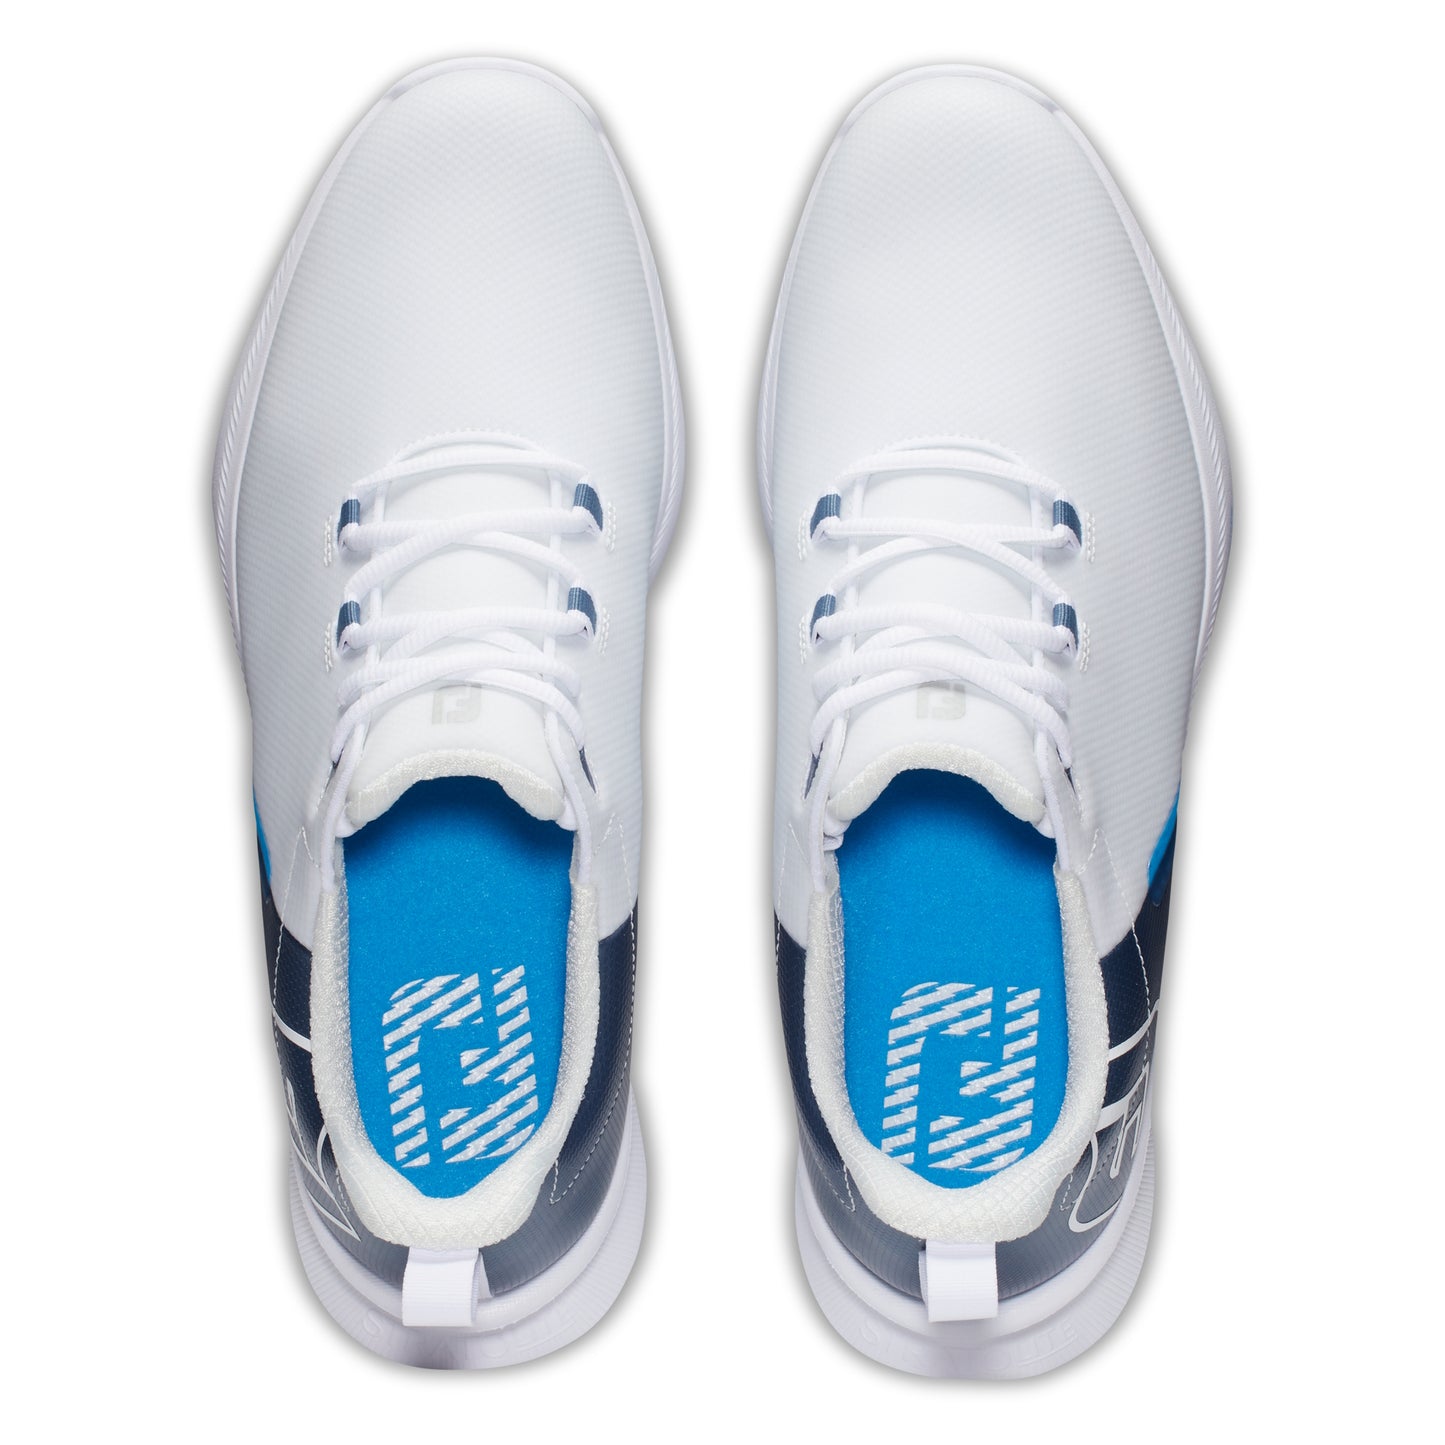 FootJoy Fuel Men's Golf Shoes - Navy/White/Blue